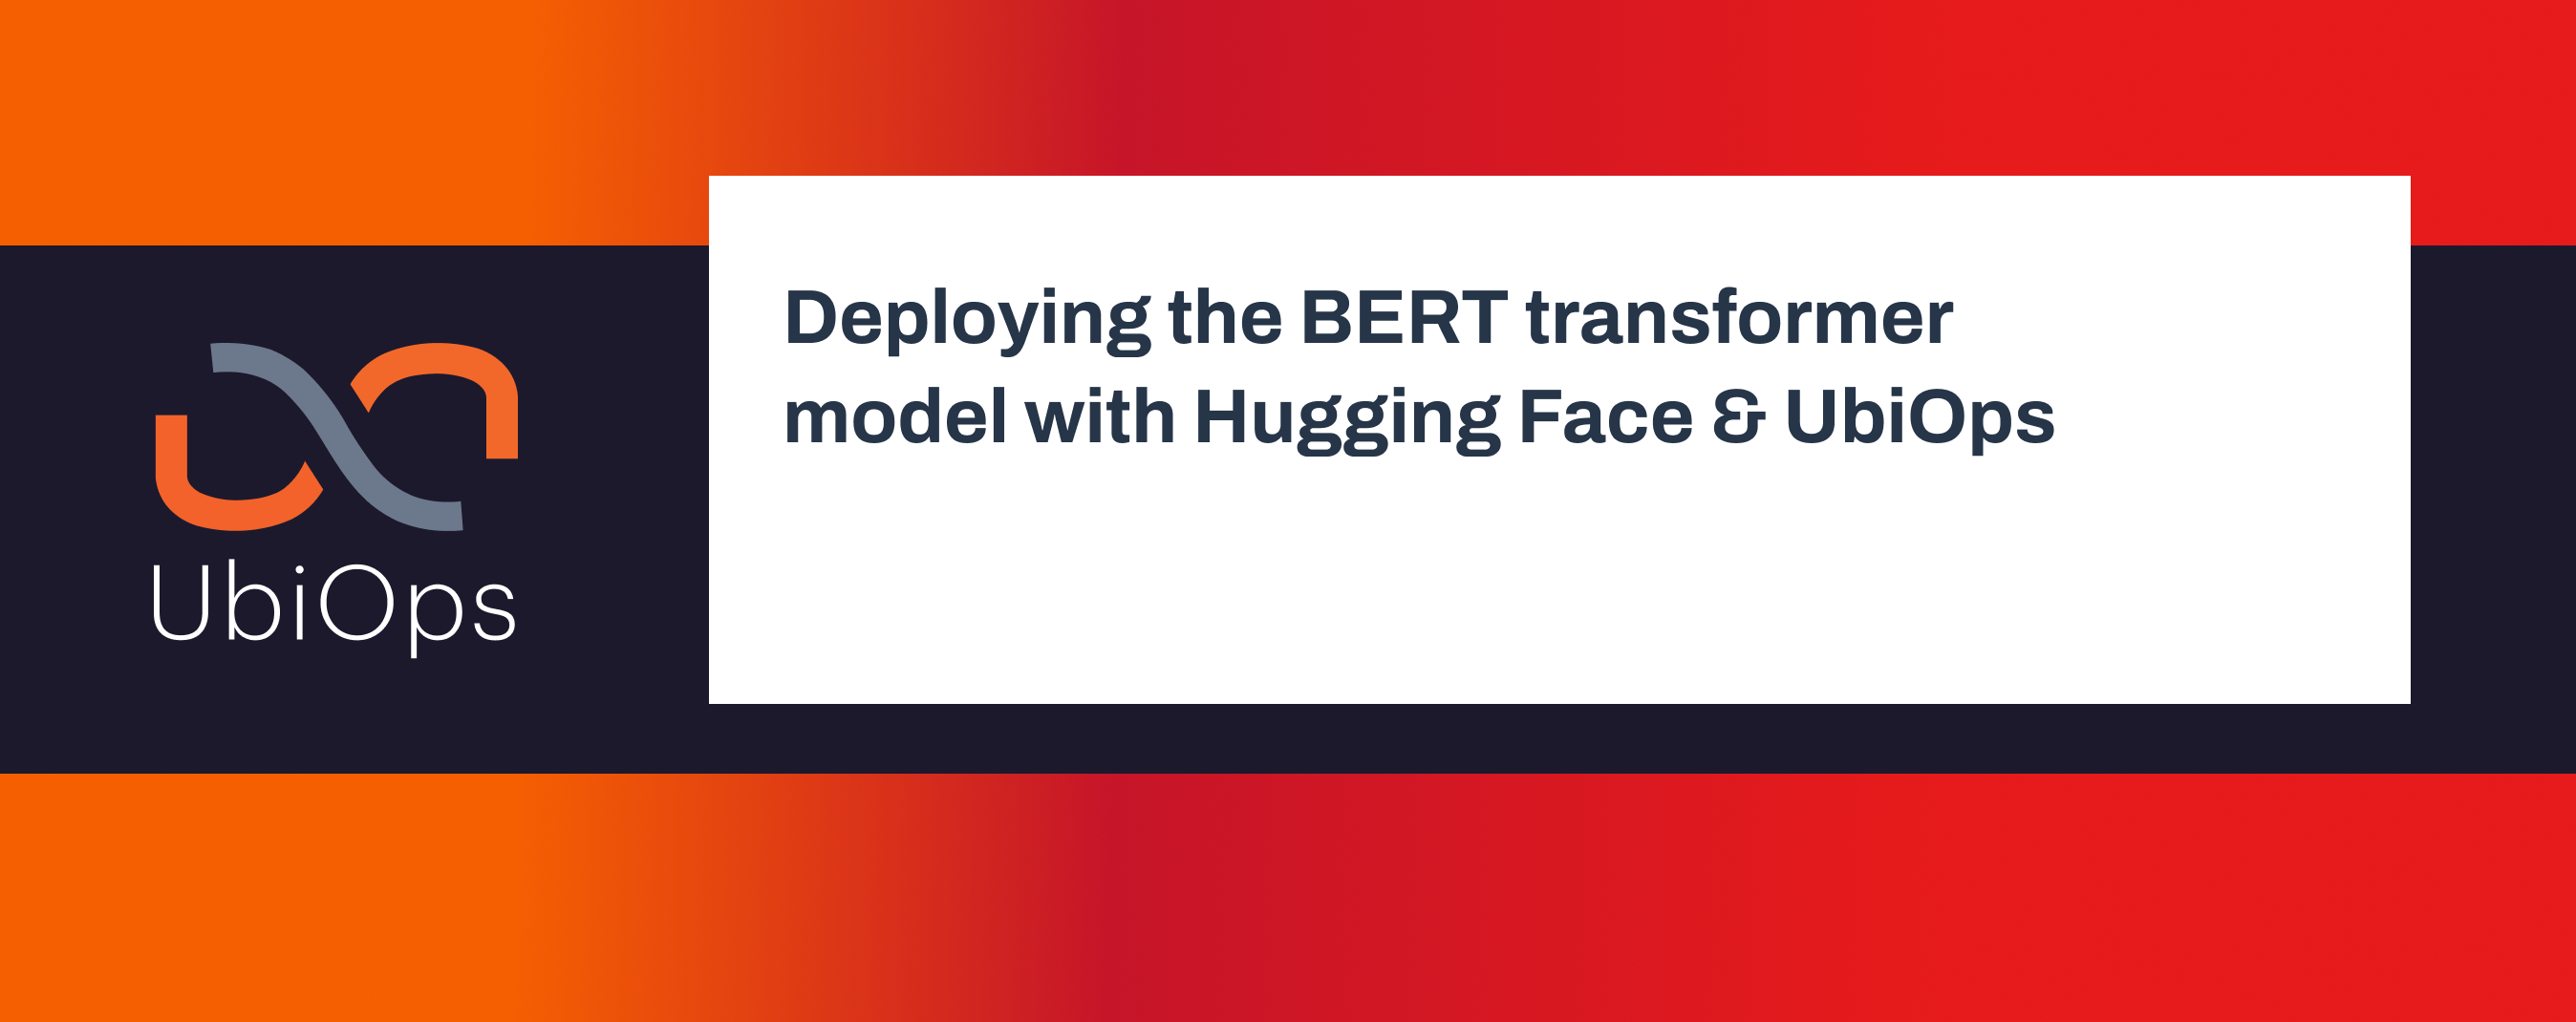 Deploying the BERT transformer model with Hugging Face & UbiOps (1)